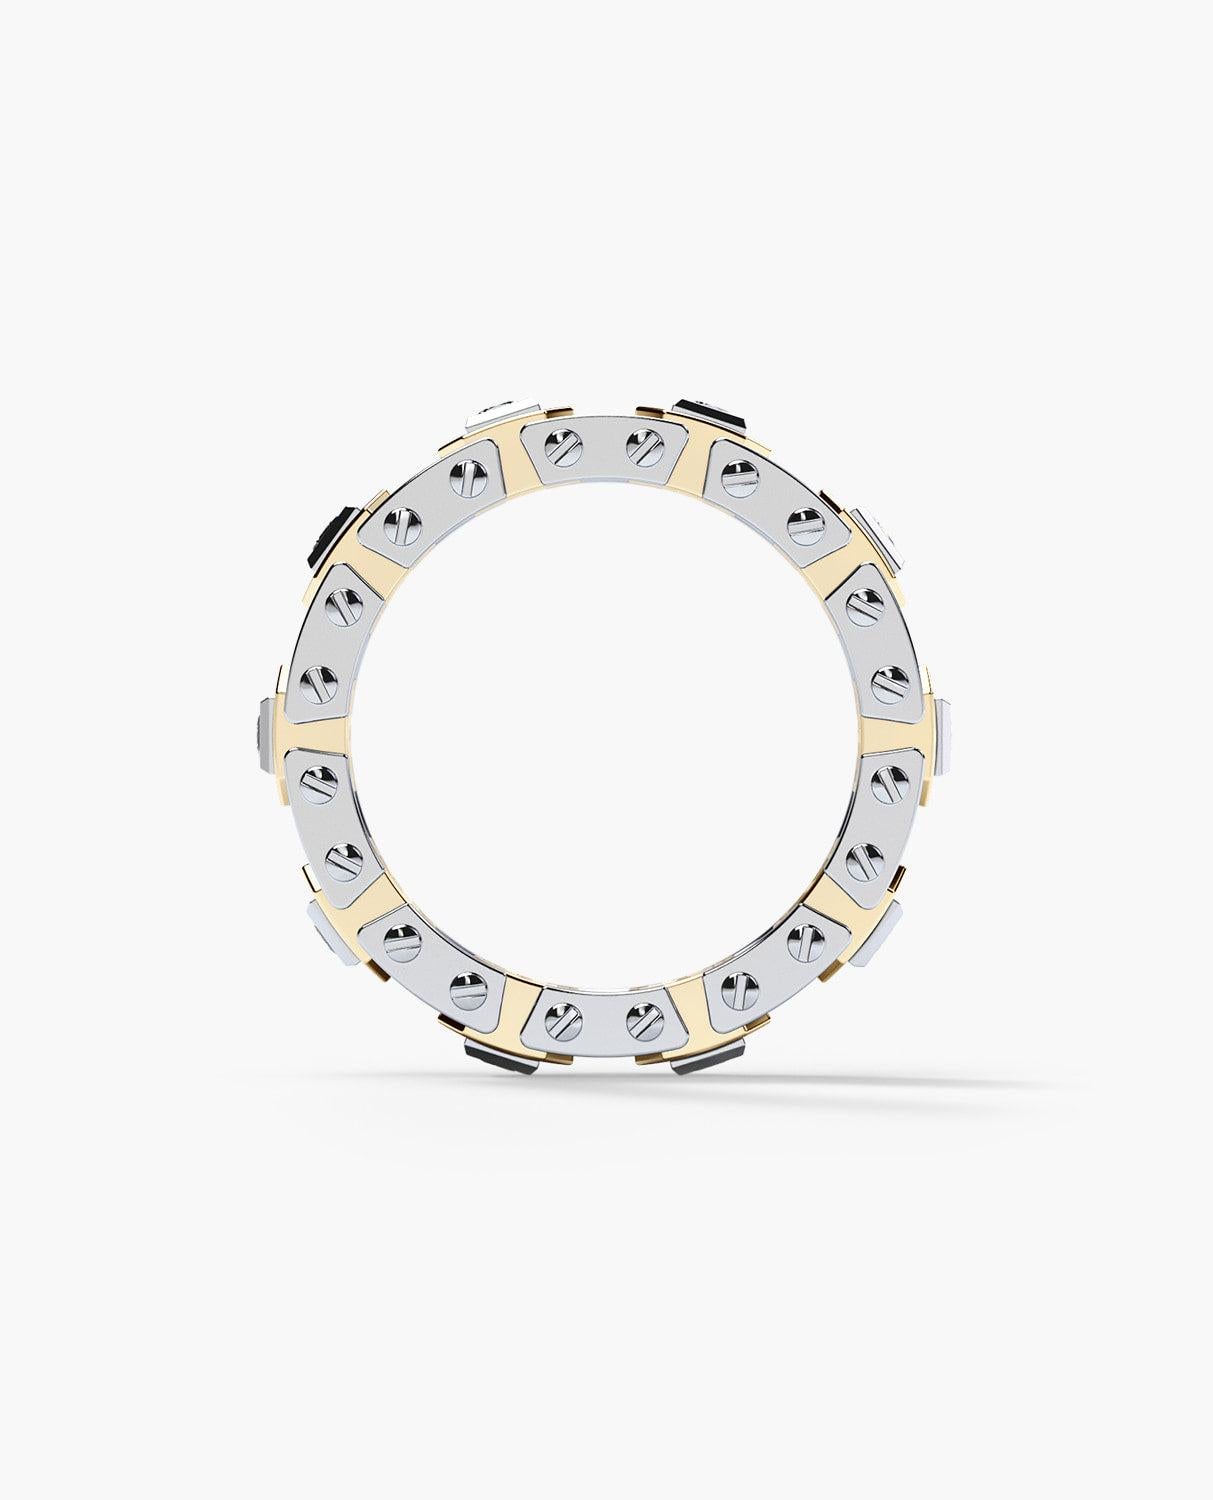 Princess Cut LA PAZ Two-Tone 14k White & Yellow Gold Ring with 0.40ct Diamonds